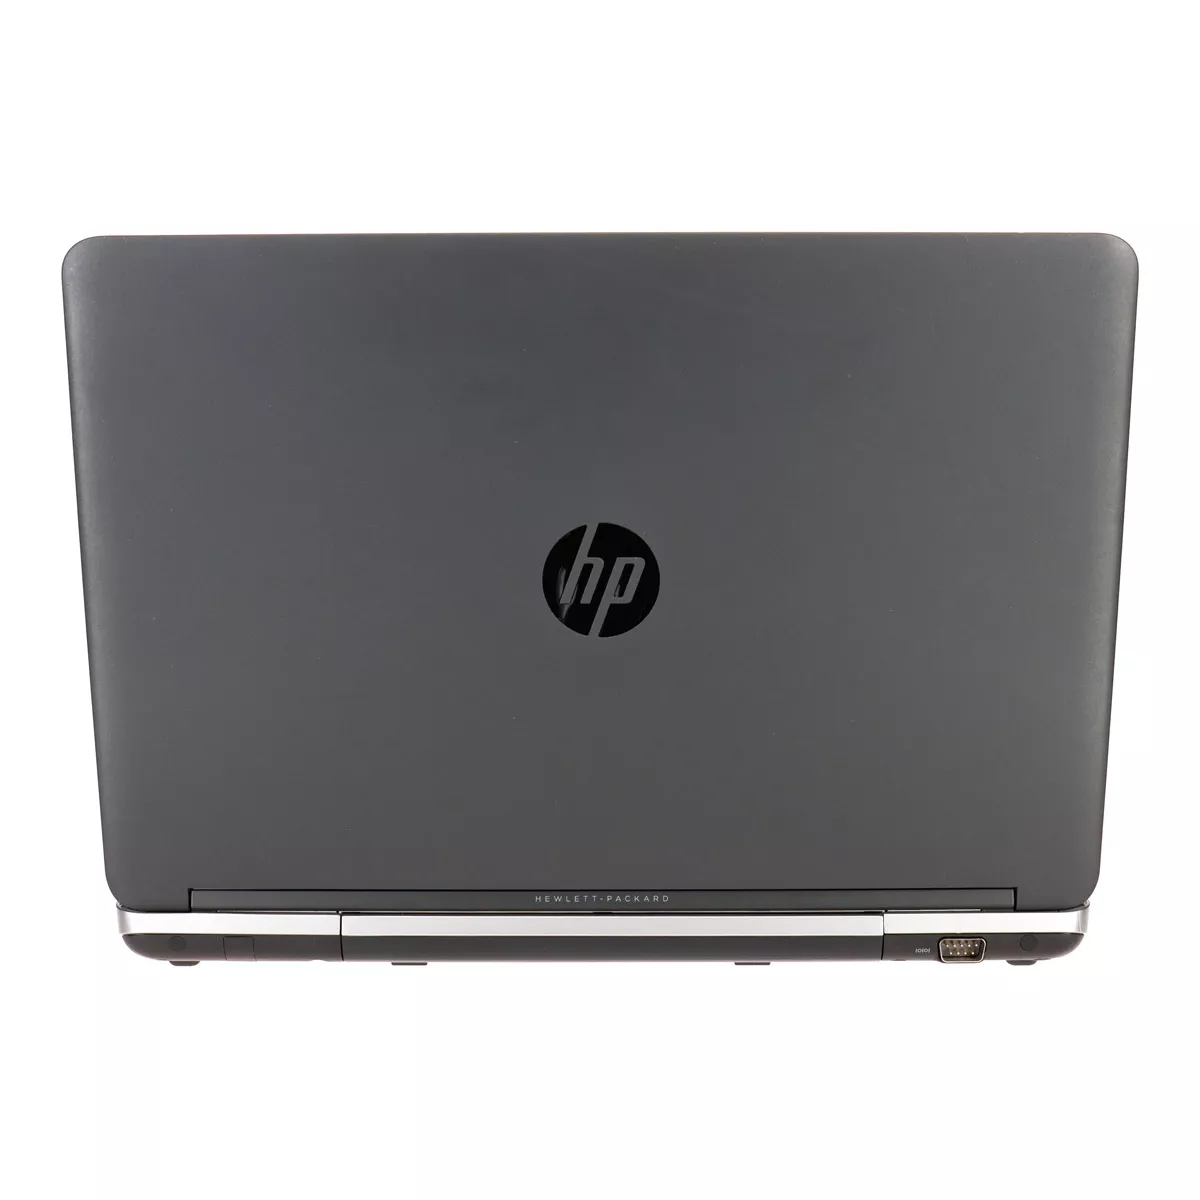 HP ProBook 650 G1 Core i5 4310M 2,7 GHz B-Ware